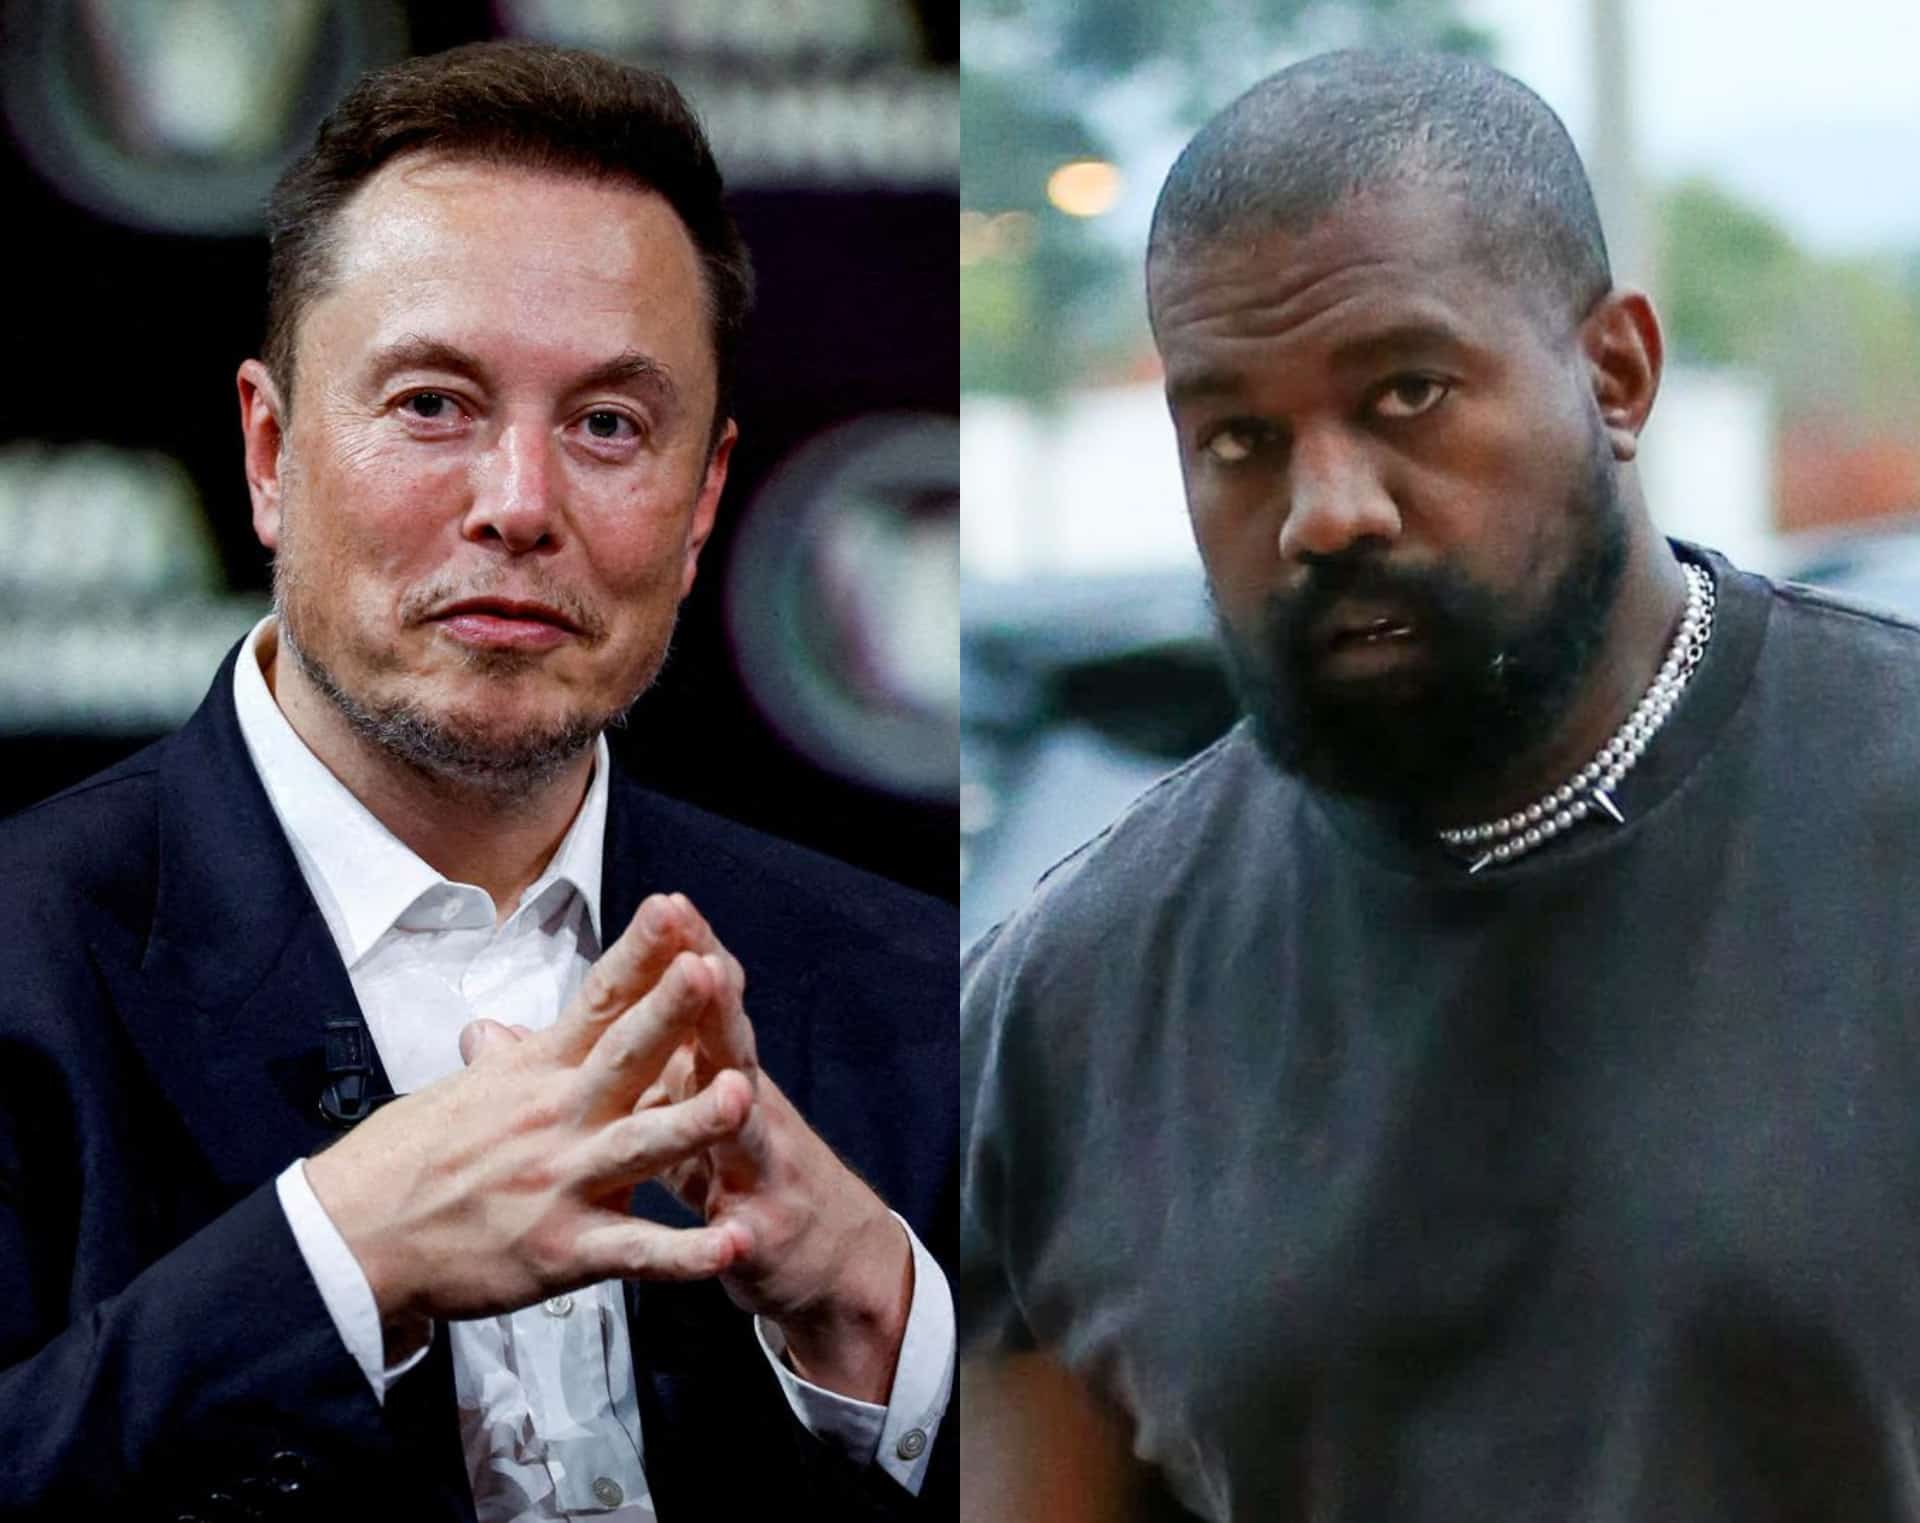 Elon Musk Responds To Kanye West's Lyrics About Him On Vultures Album